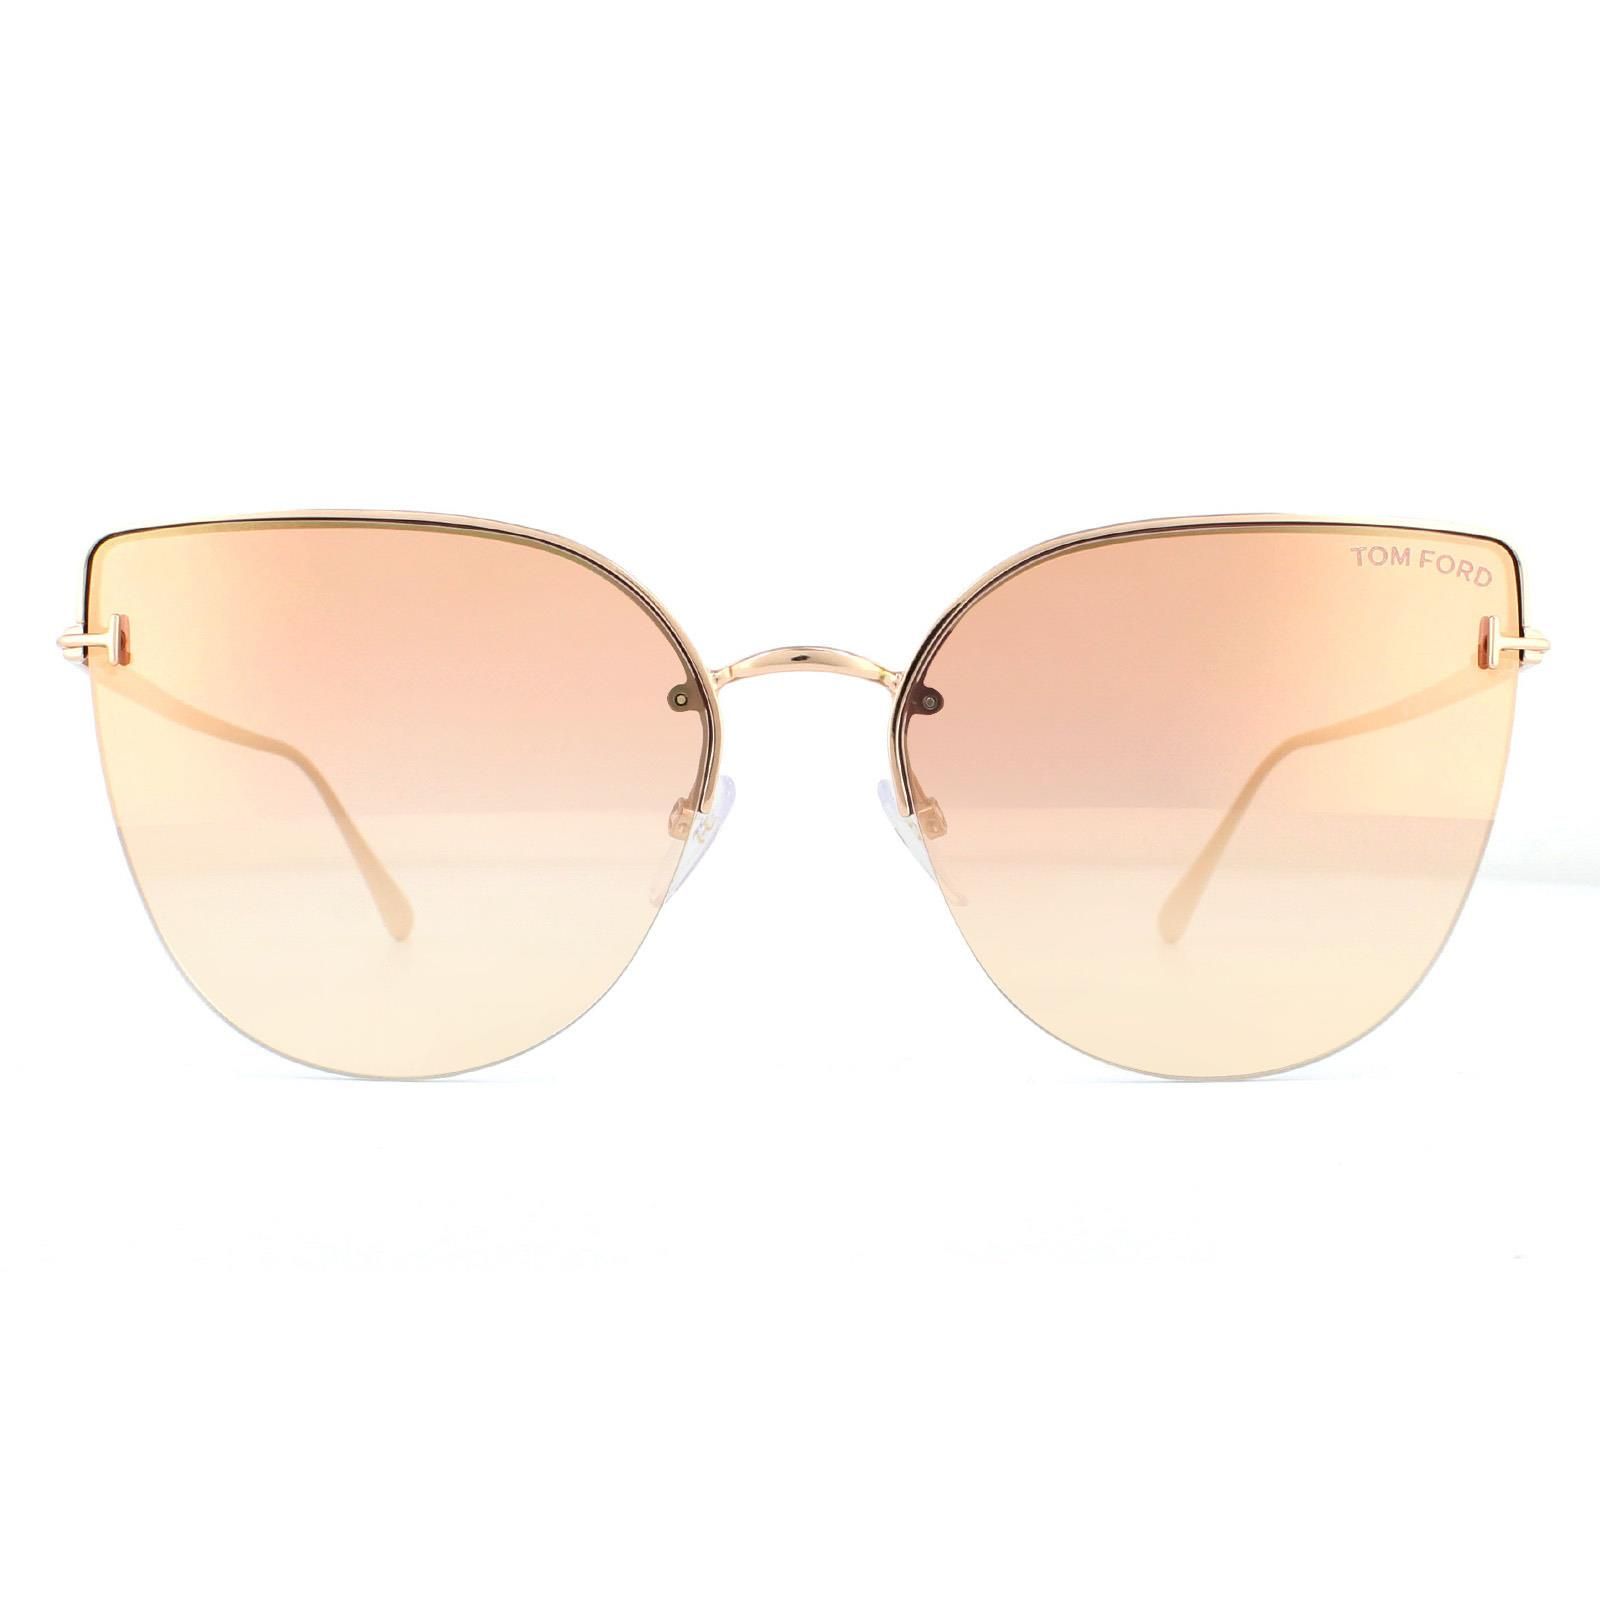 Tom Ford Sunglasses Ingrid-02 FT0652 33Z Gold Pink Purple Gradient Mirror